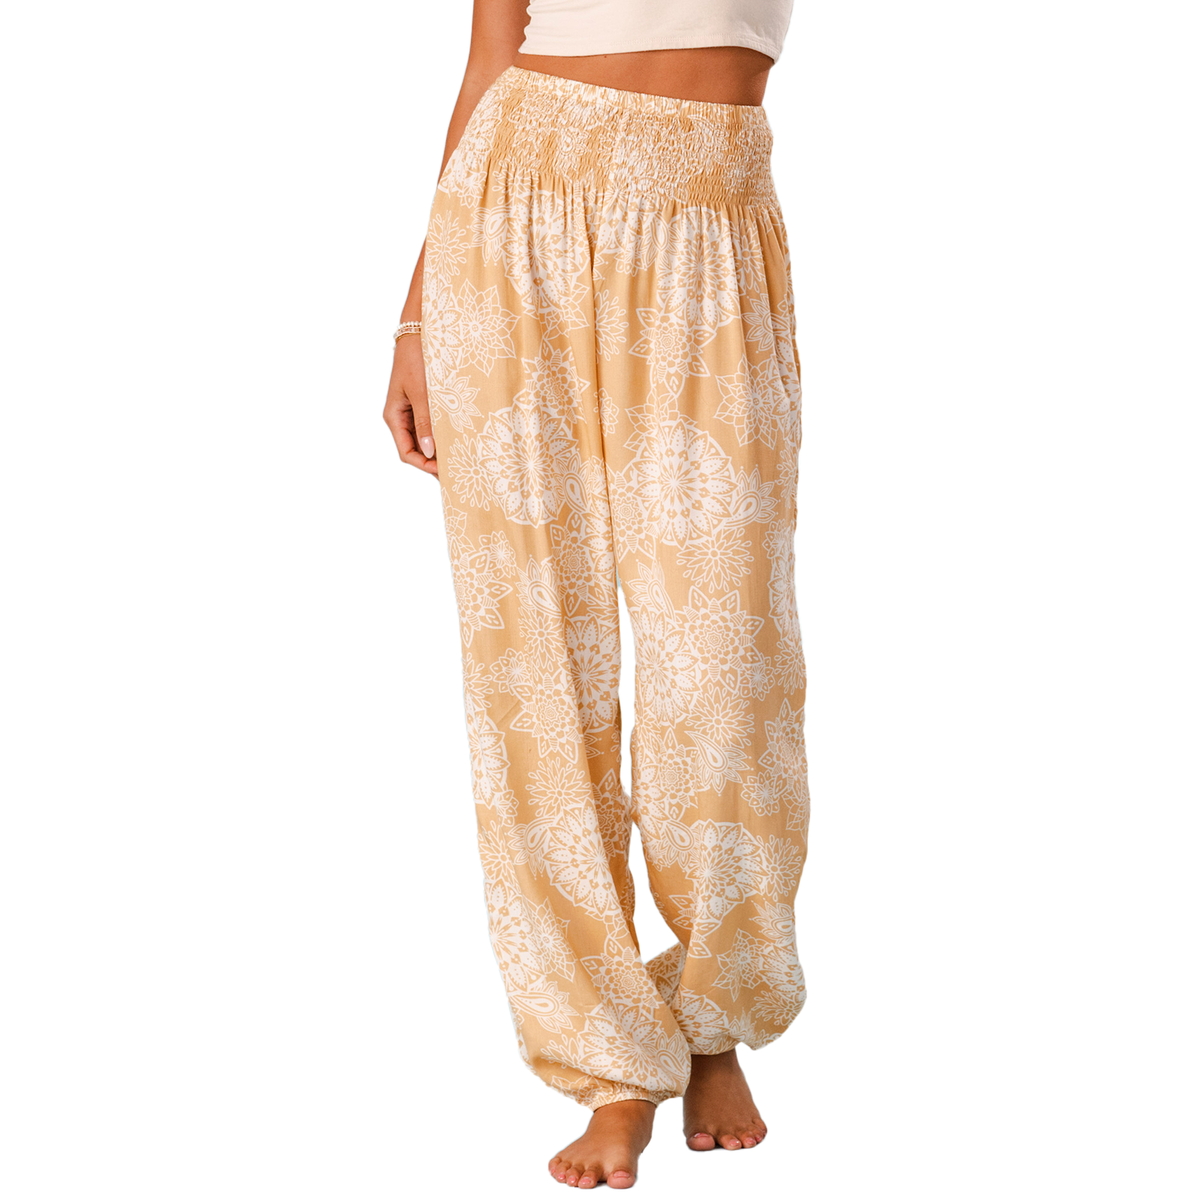 Light yellow harem pants with white mandala print